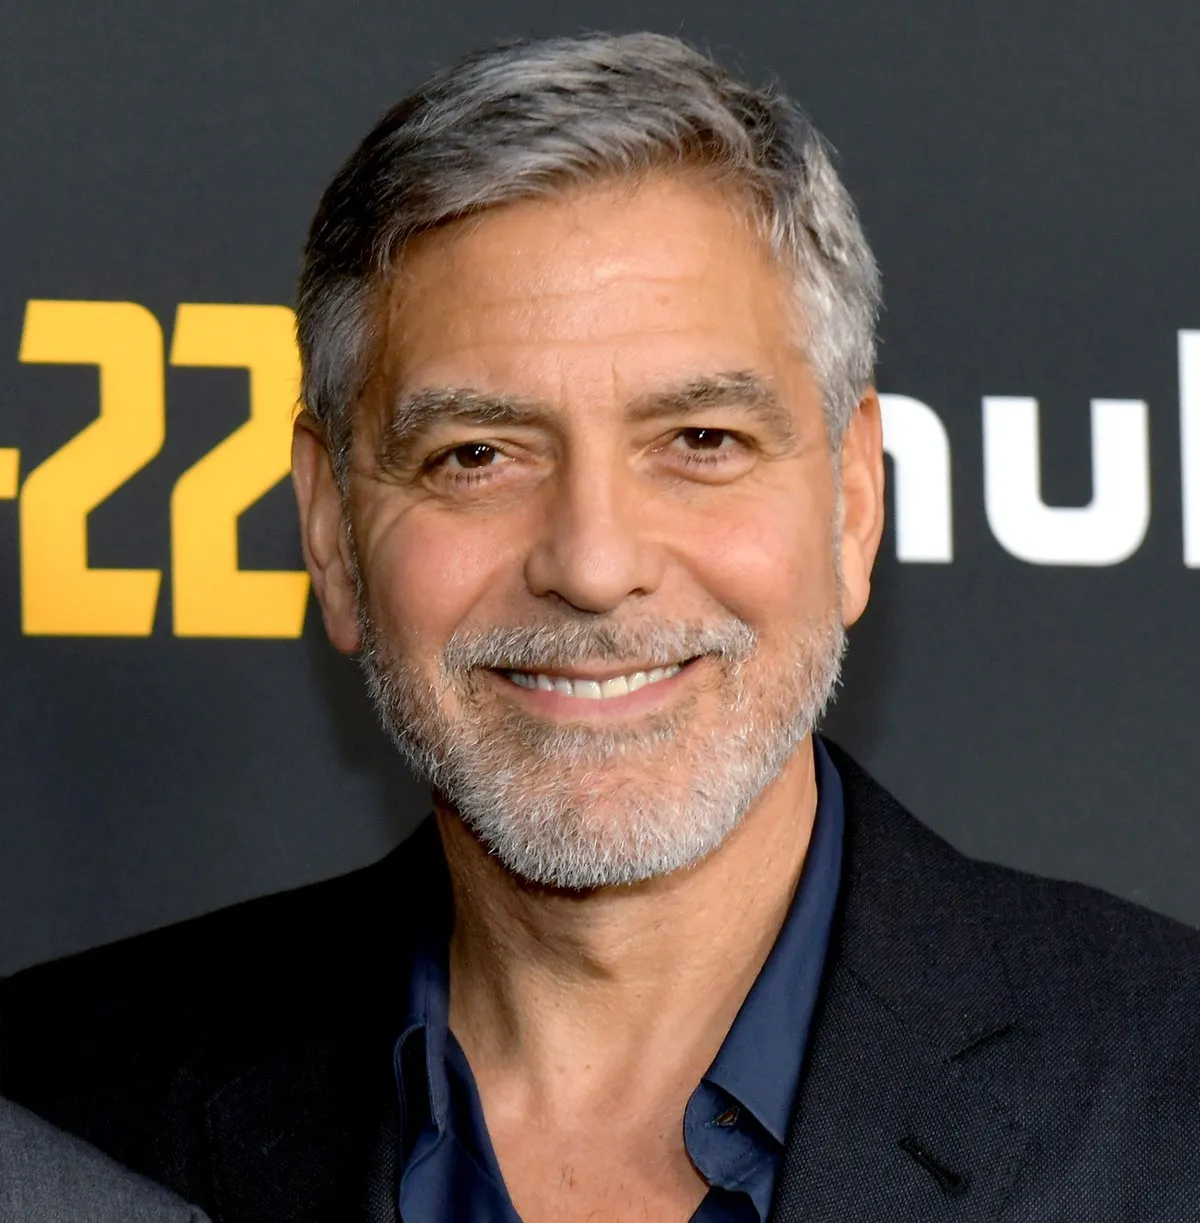 George Clooney: 89.91 Percent Accurate